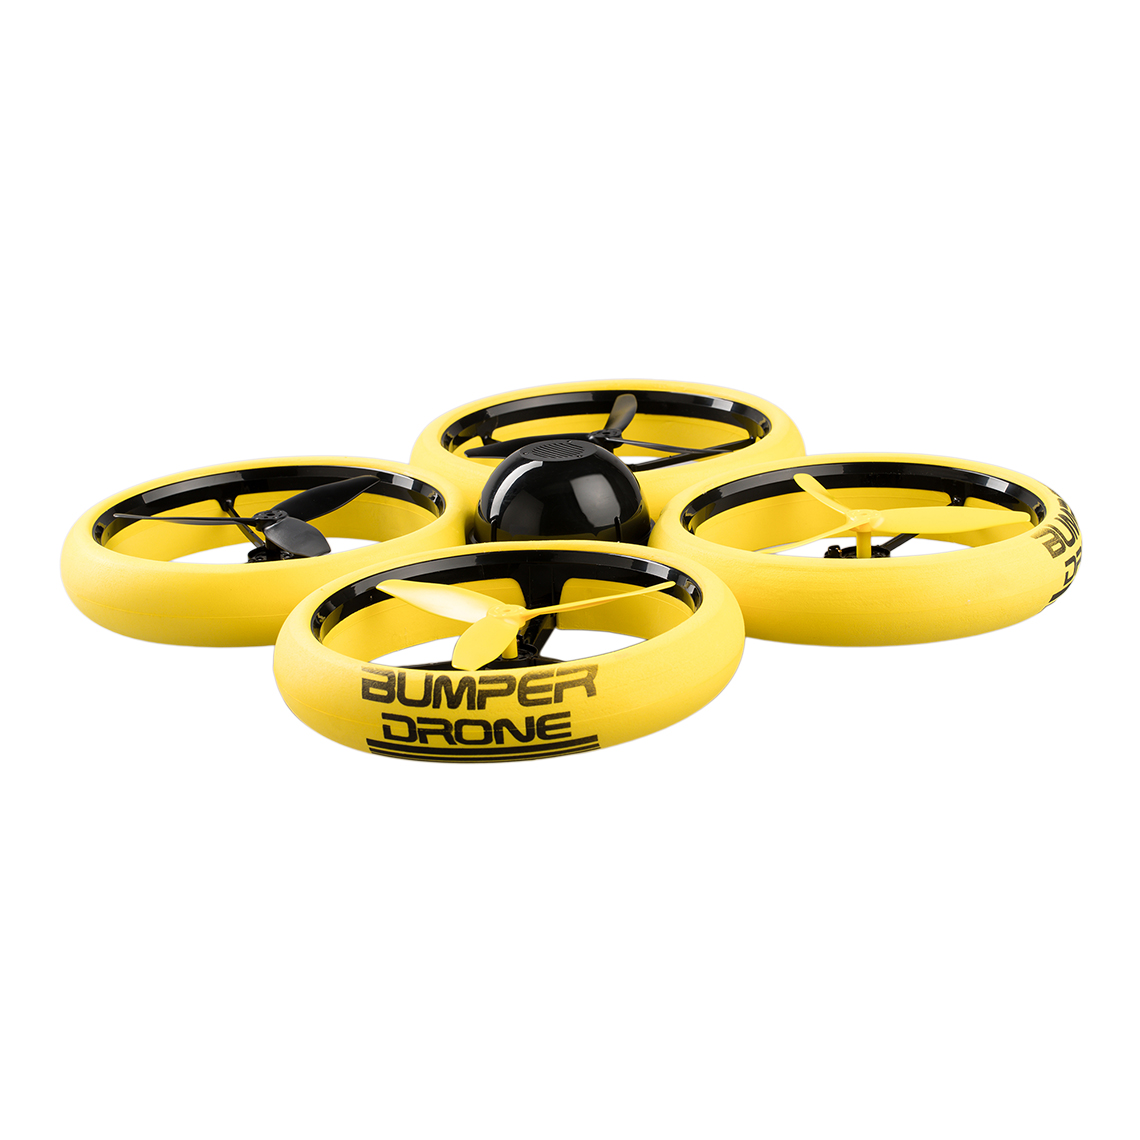 FLYBOTIC Bumper Drone – Silverlit